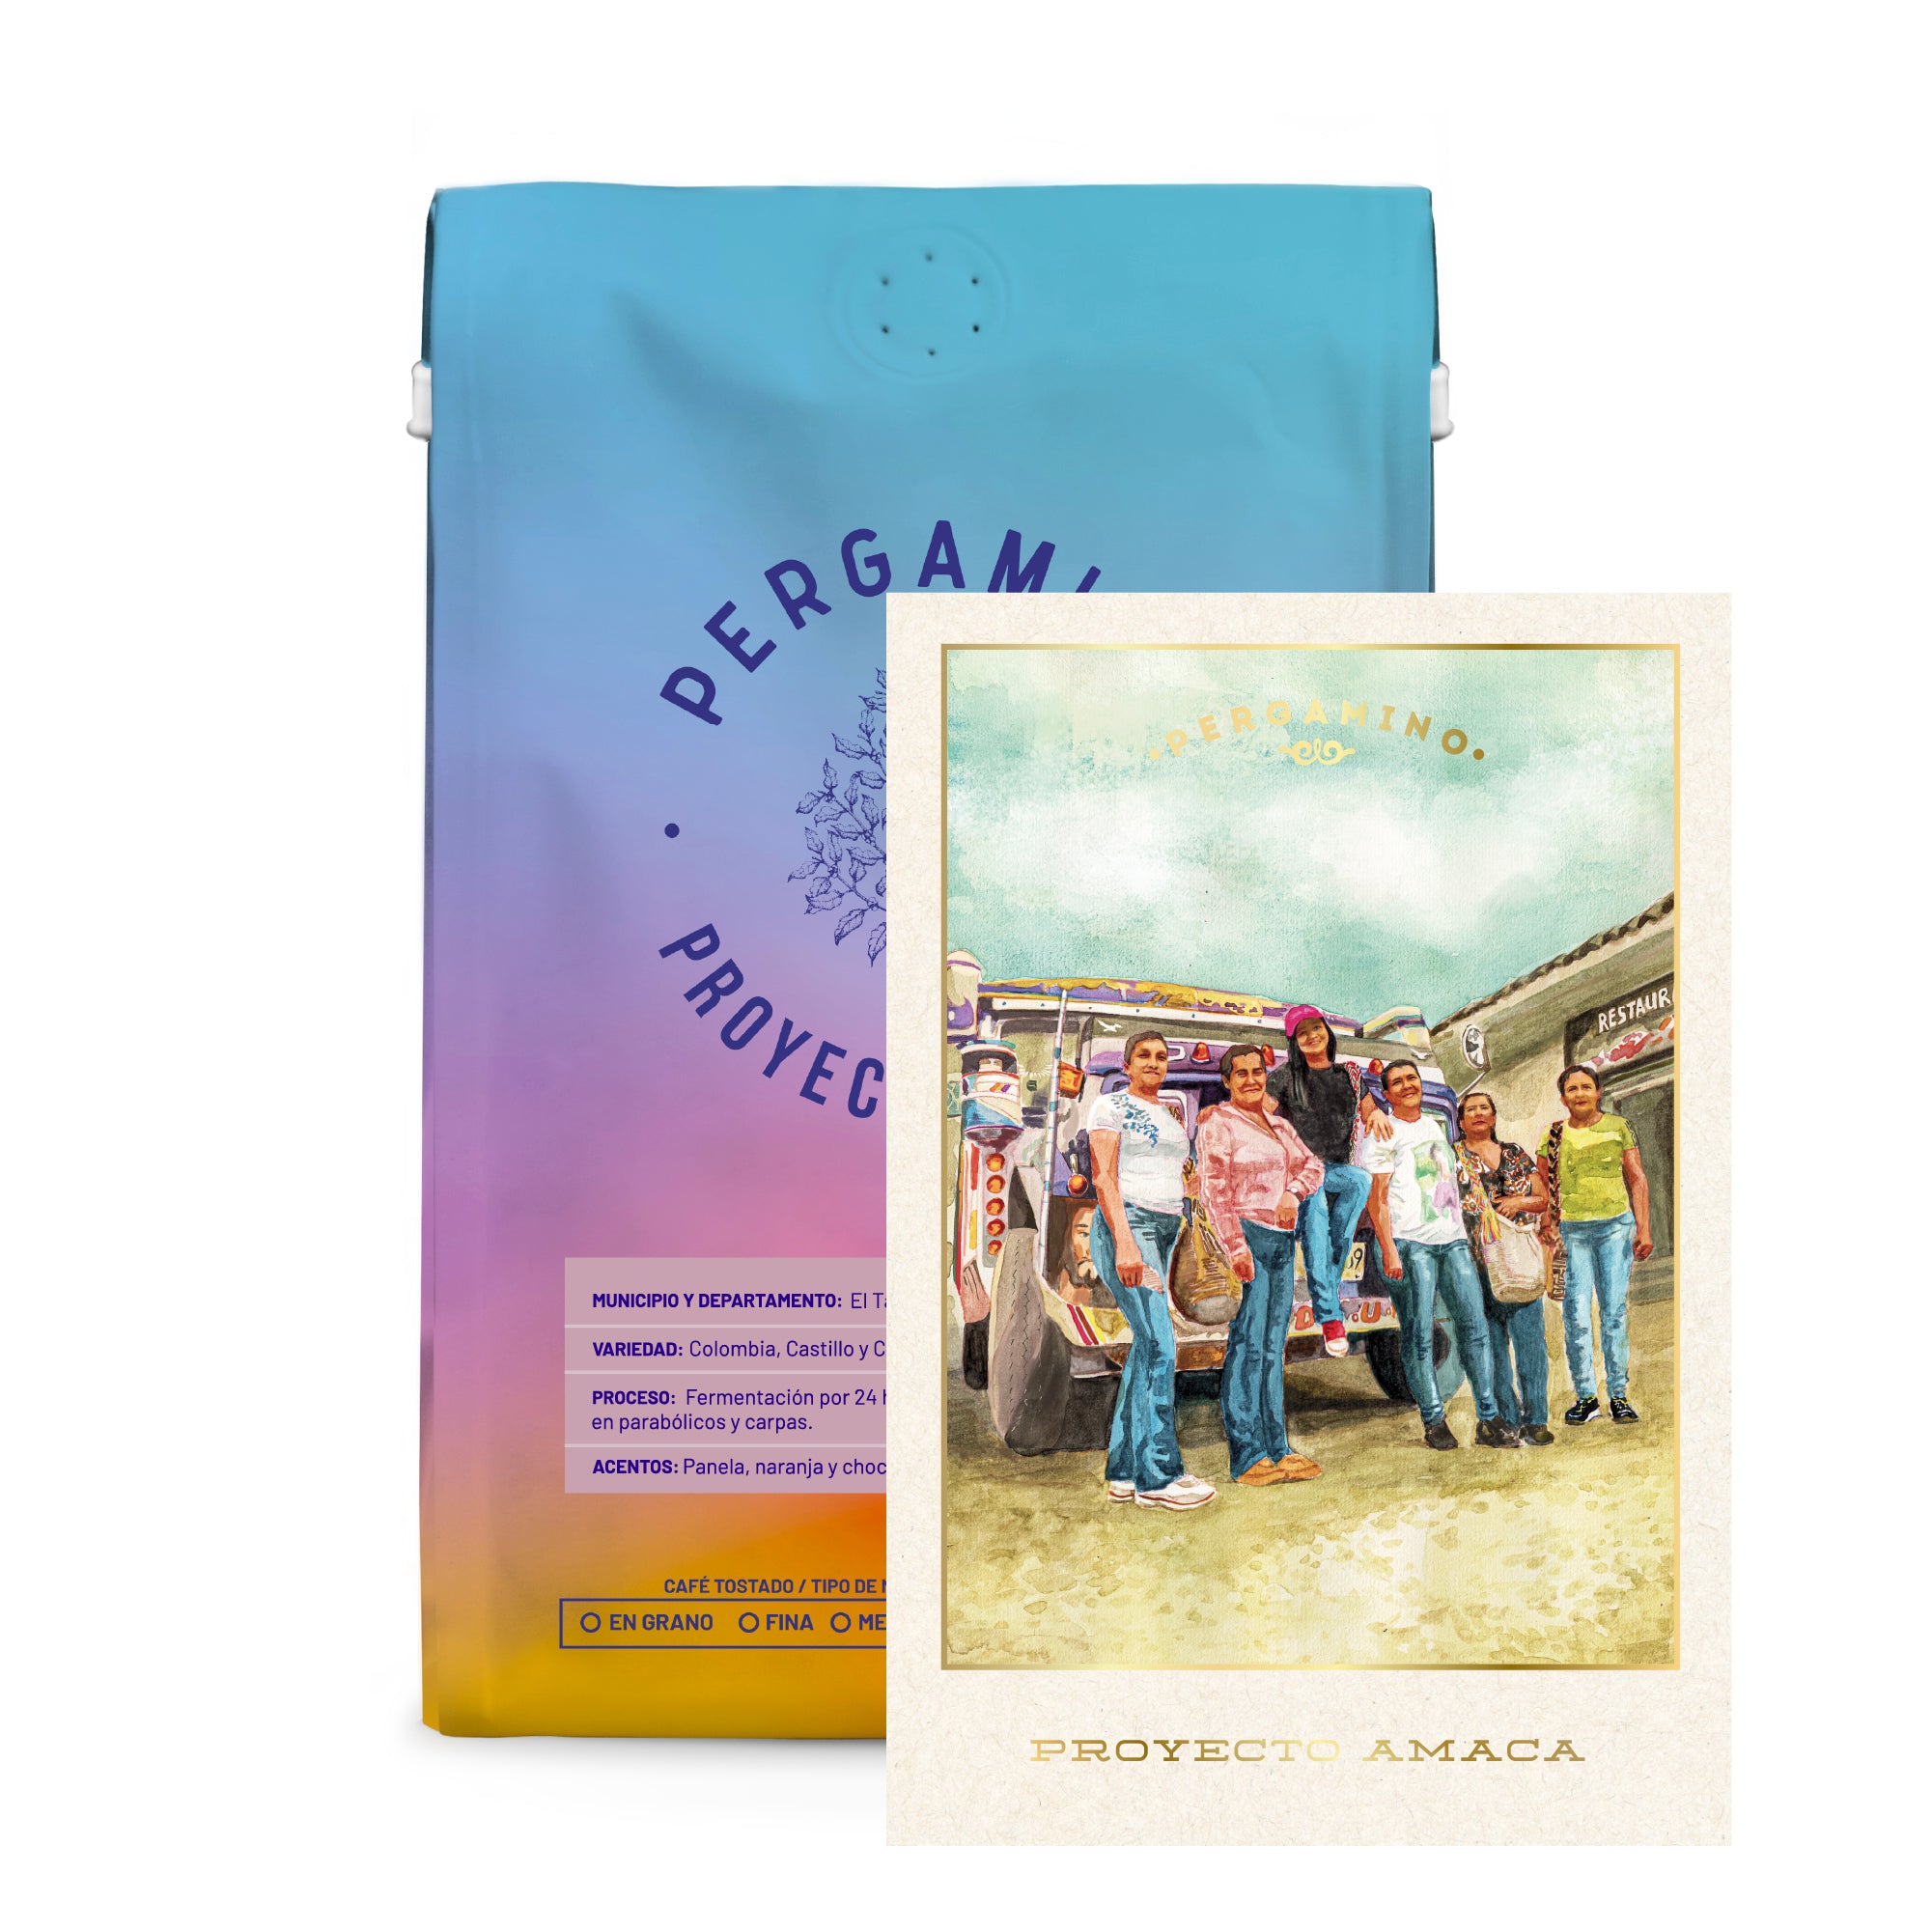 Proyecto Amaca, El Tambo, Cauca (500g bag)